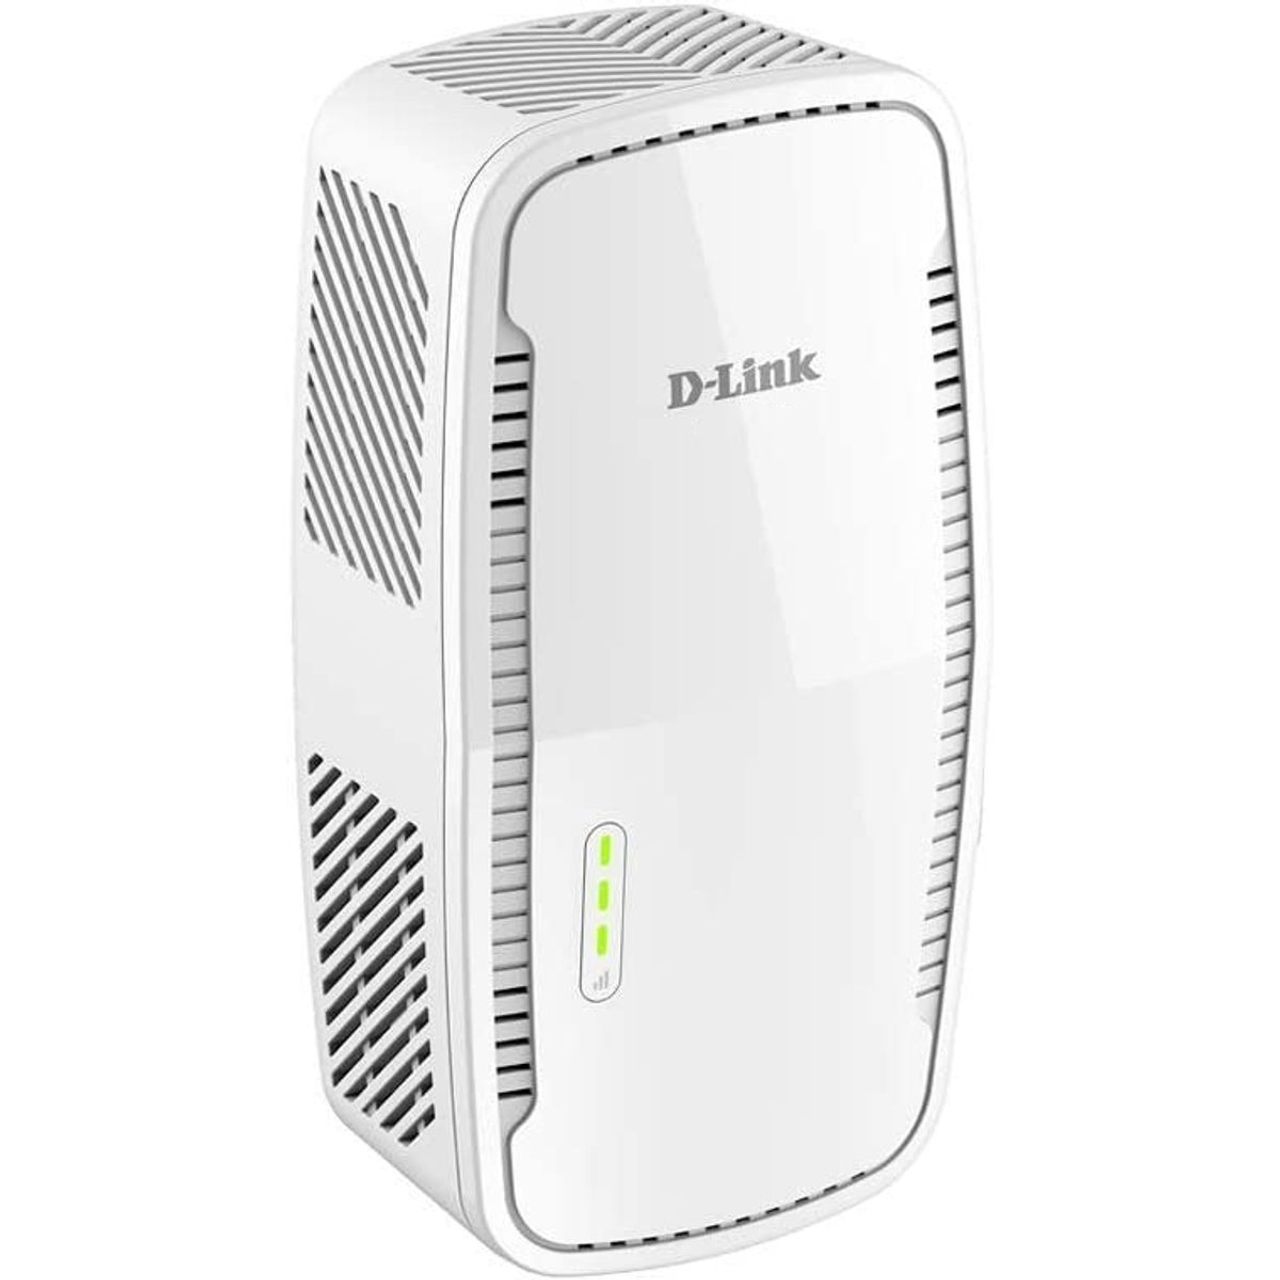 D-Link WiFi Range Extender, AC1900, DAP-1955 product image